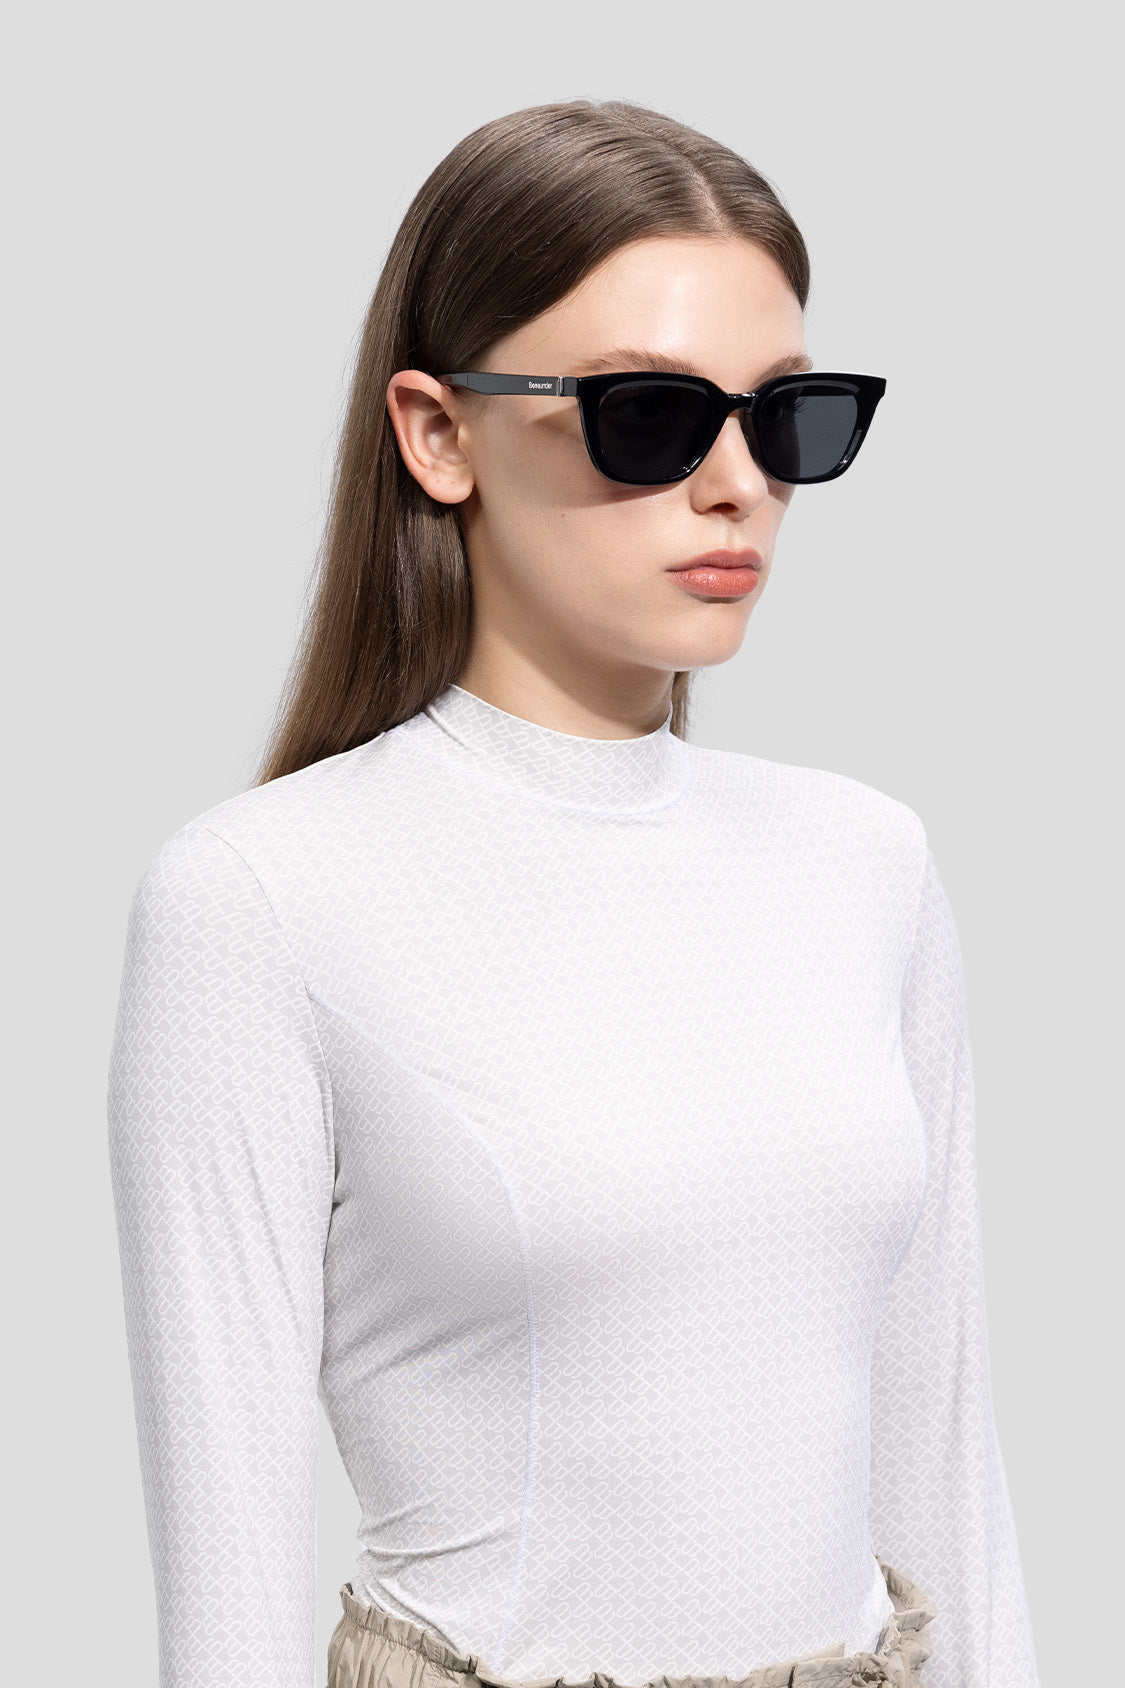 beneunder women's sunglasses foldable #color_black